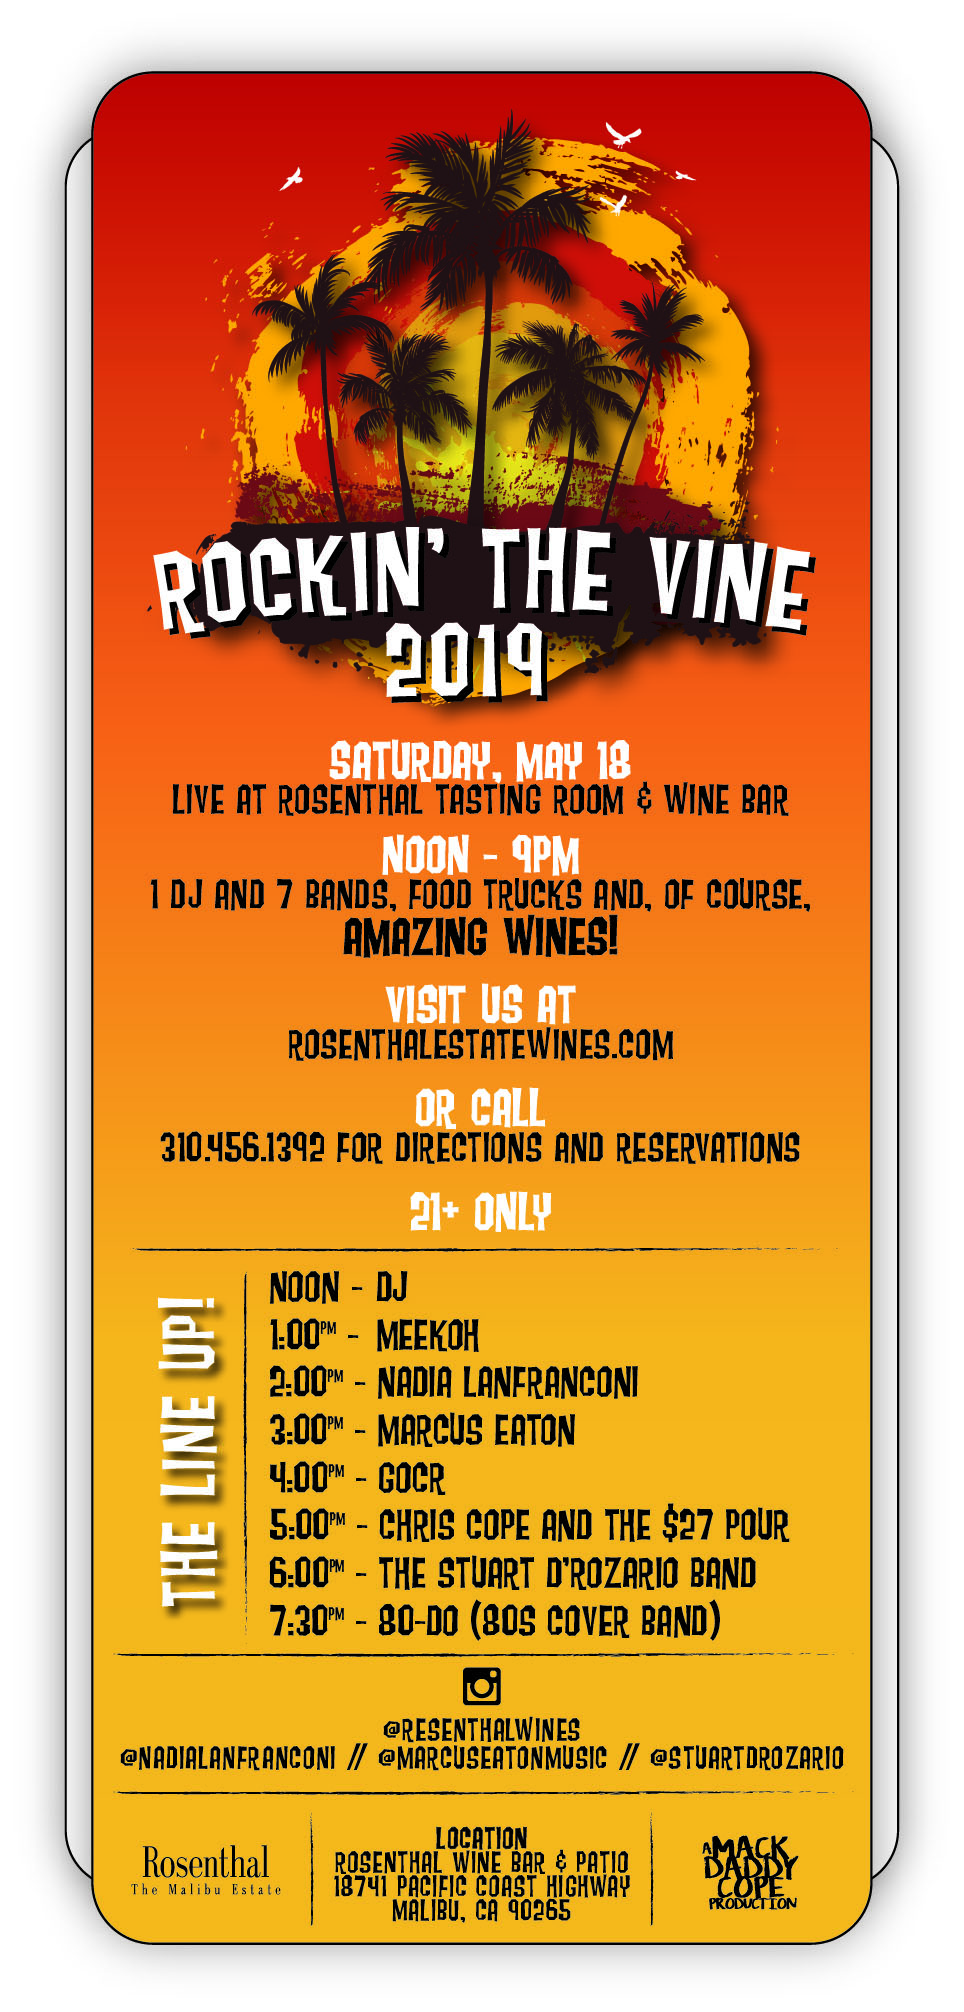 Rockin' The Vine 2019. Saturday, May 18